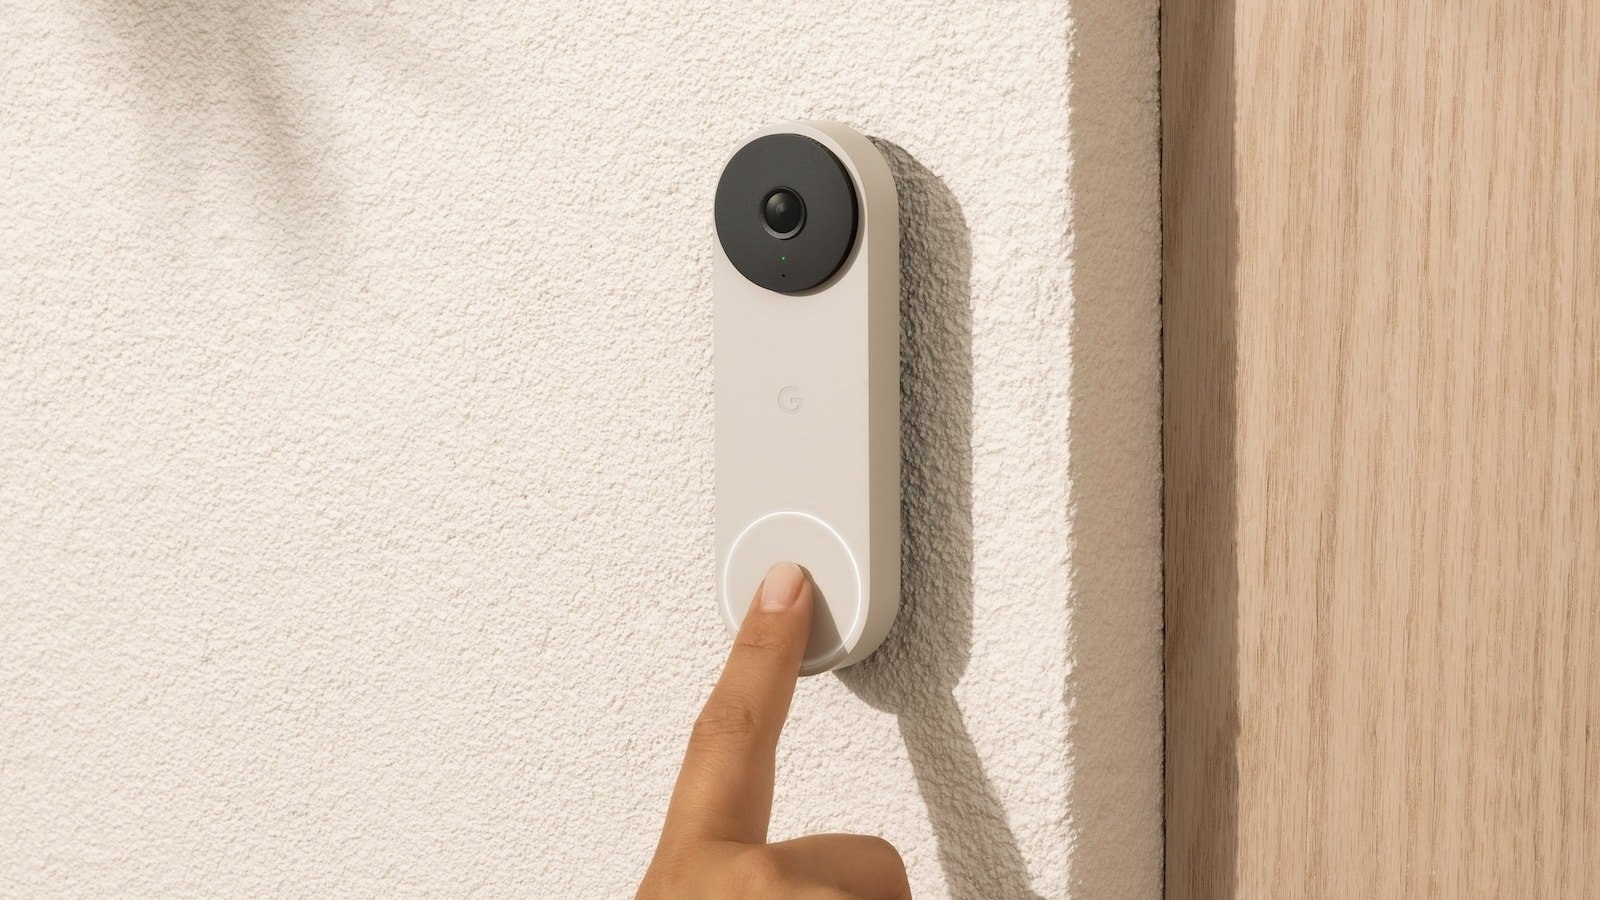 Google Nest Doorbell (wired, 2nd gen) provides always-on power & 24/7 video recording